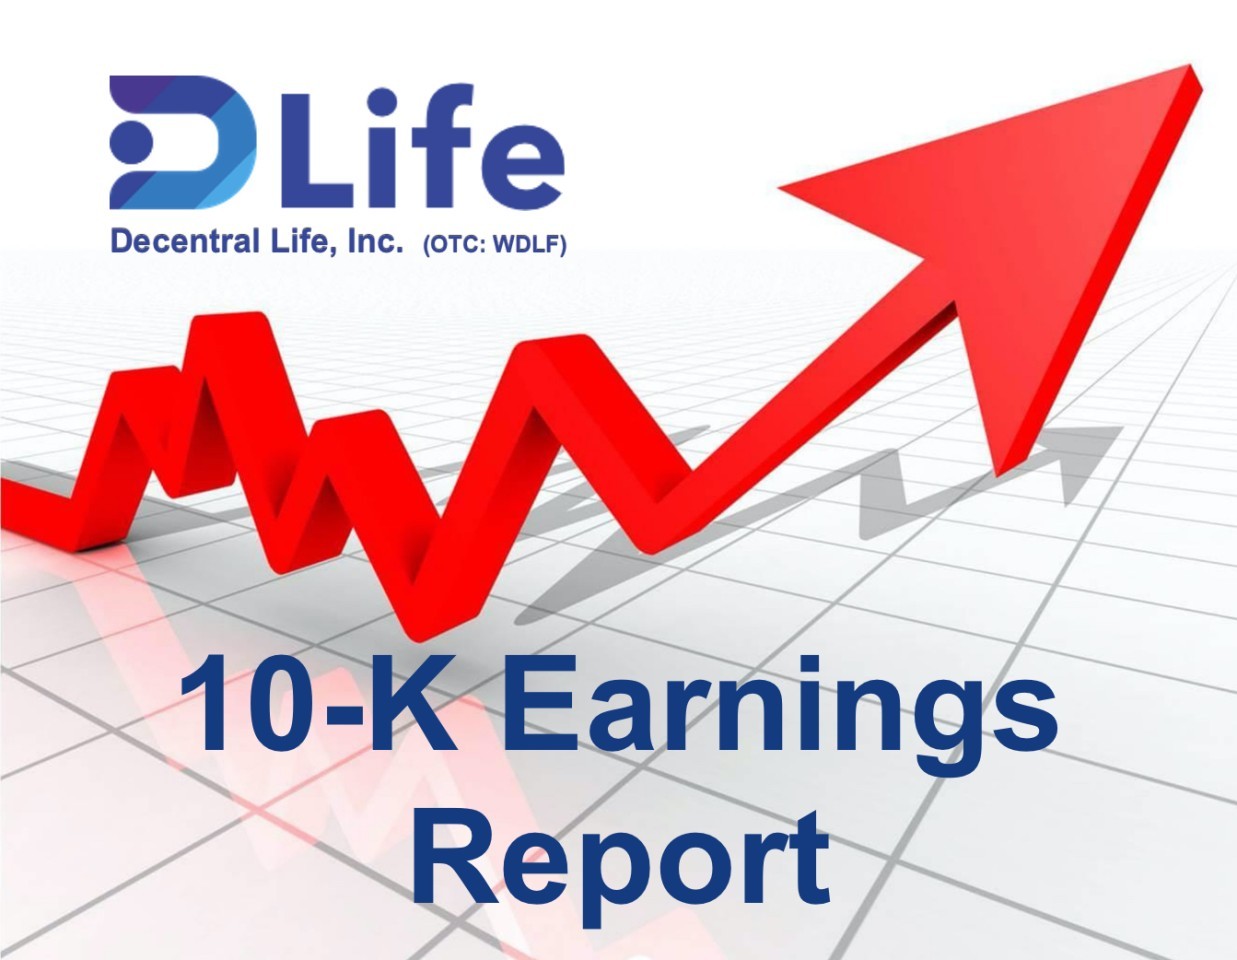 Decentral Life Inc 10-K Update Press Release